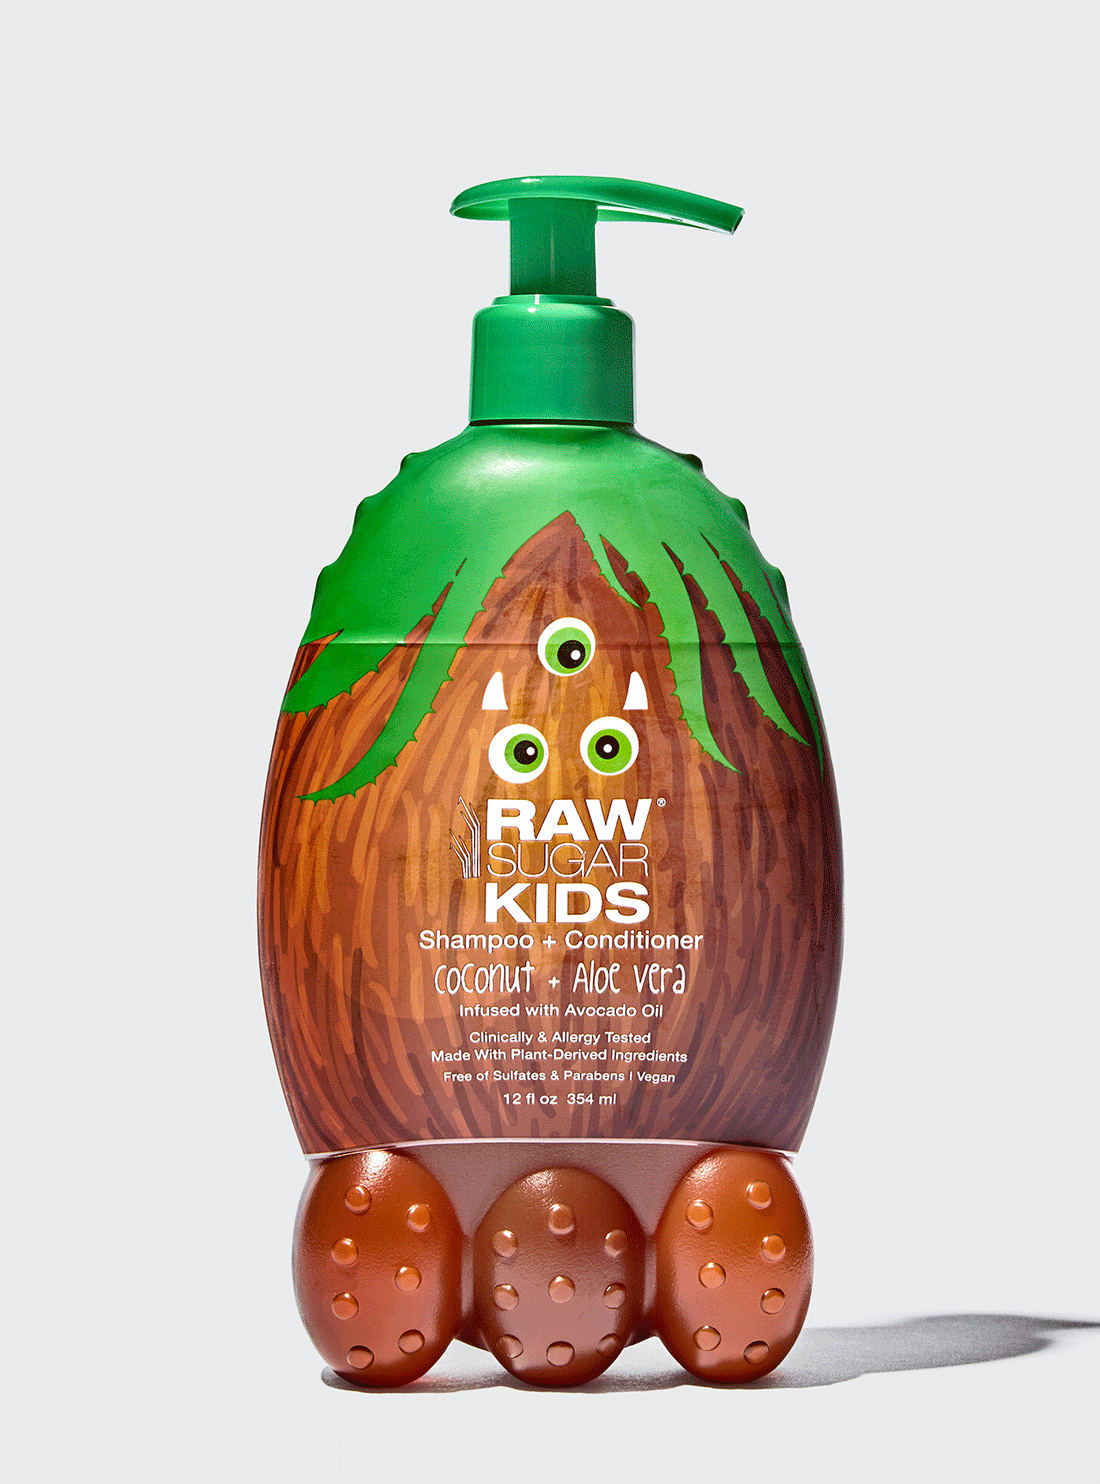 Animated Raw Sugar Kids Coconut + Aloe Vera Shampoo + Conditioner monster bottle morphs into Aloe Vera prickle hair from pump top